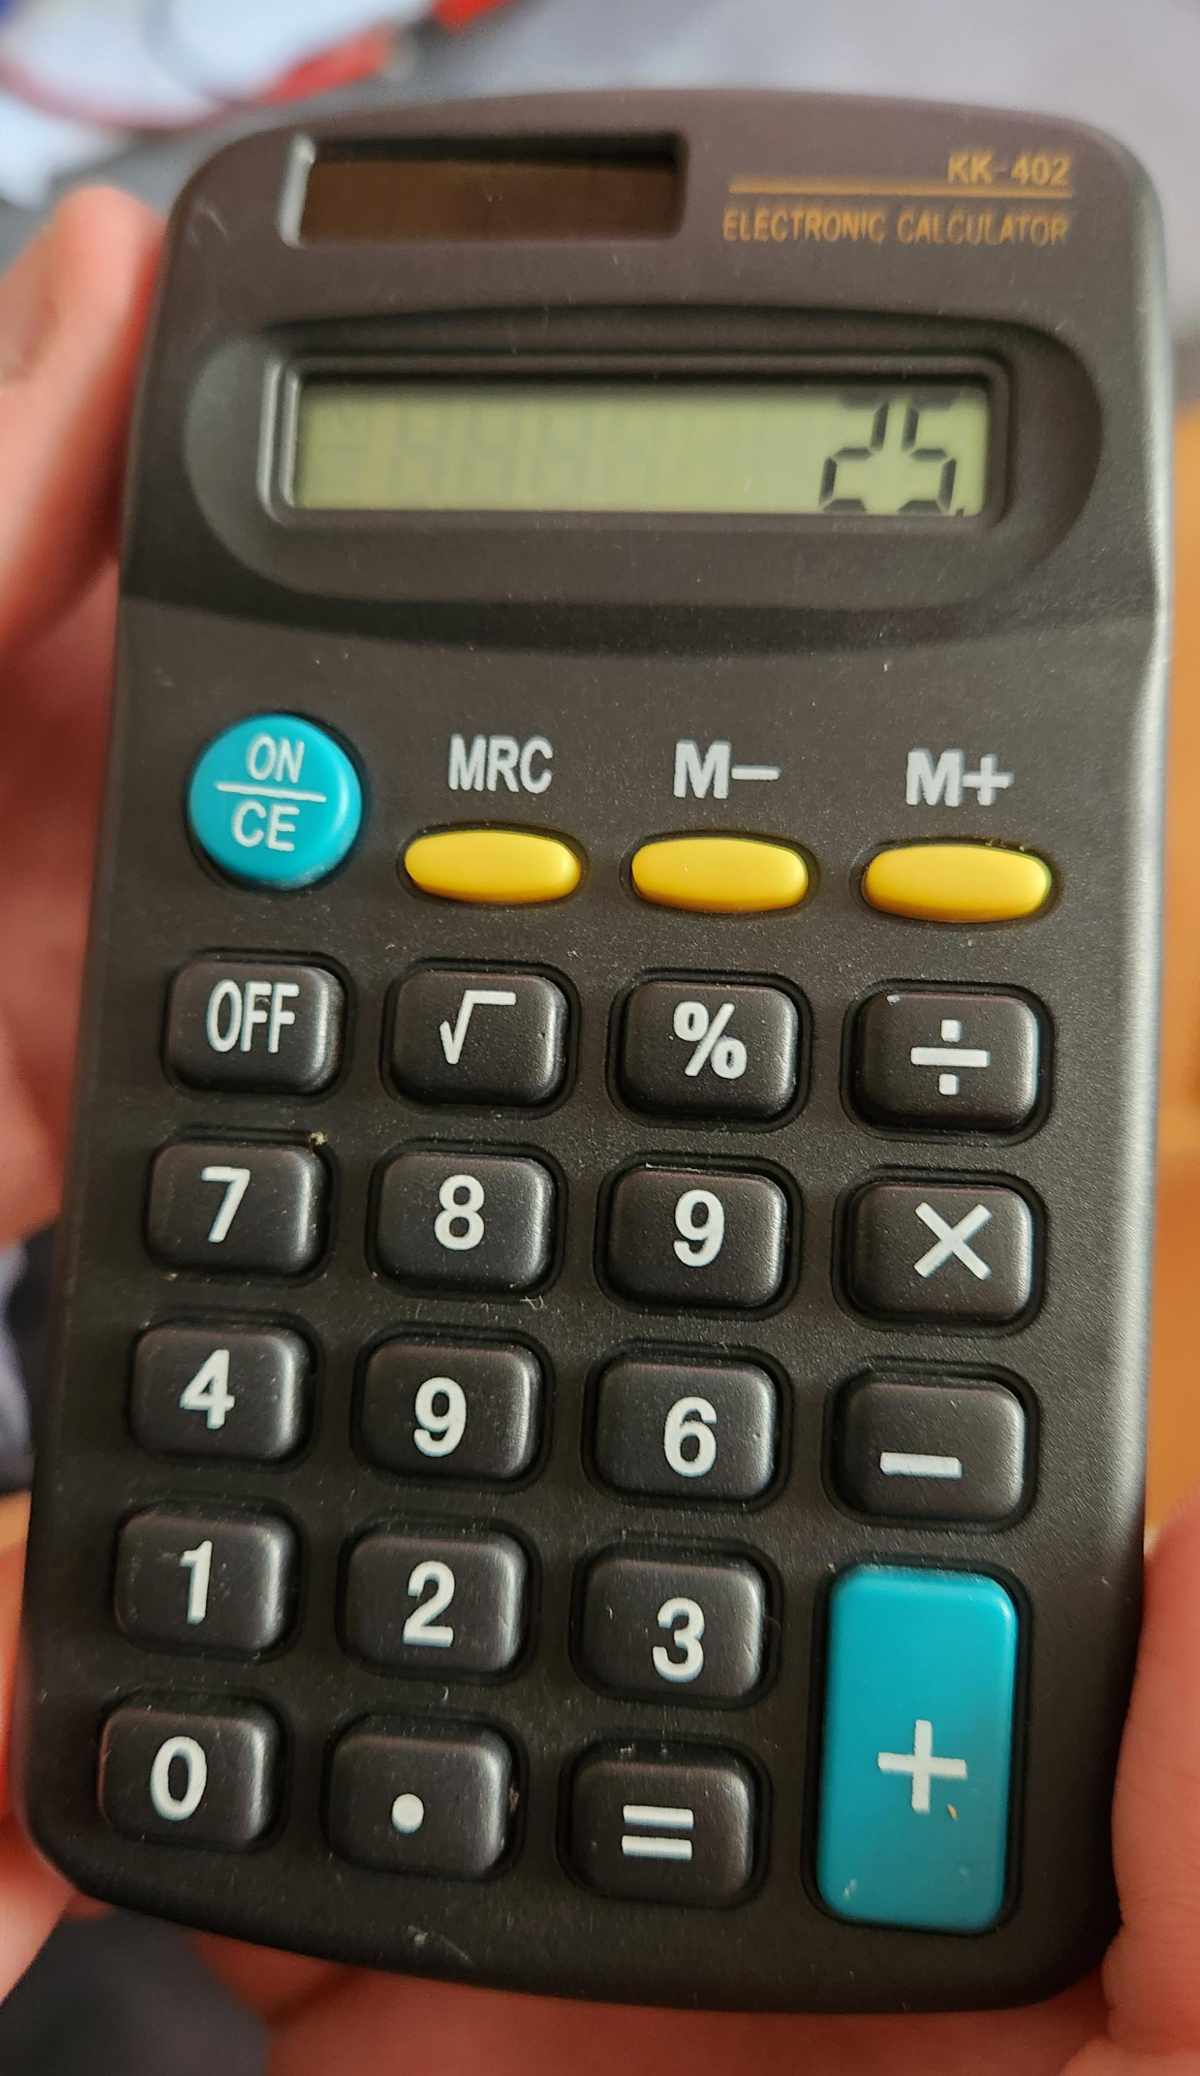 Well it was a cheap calculator